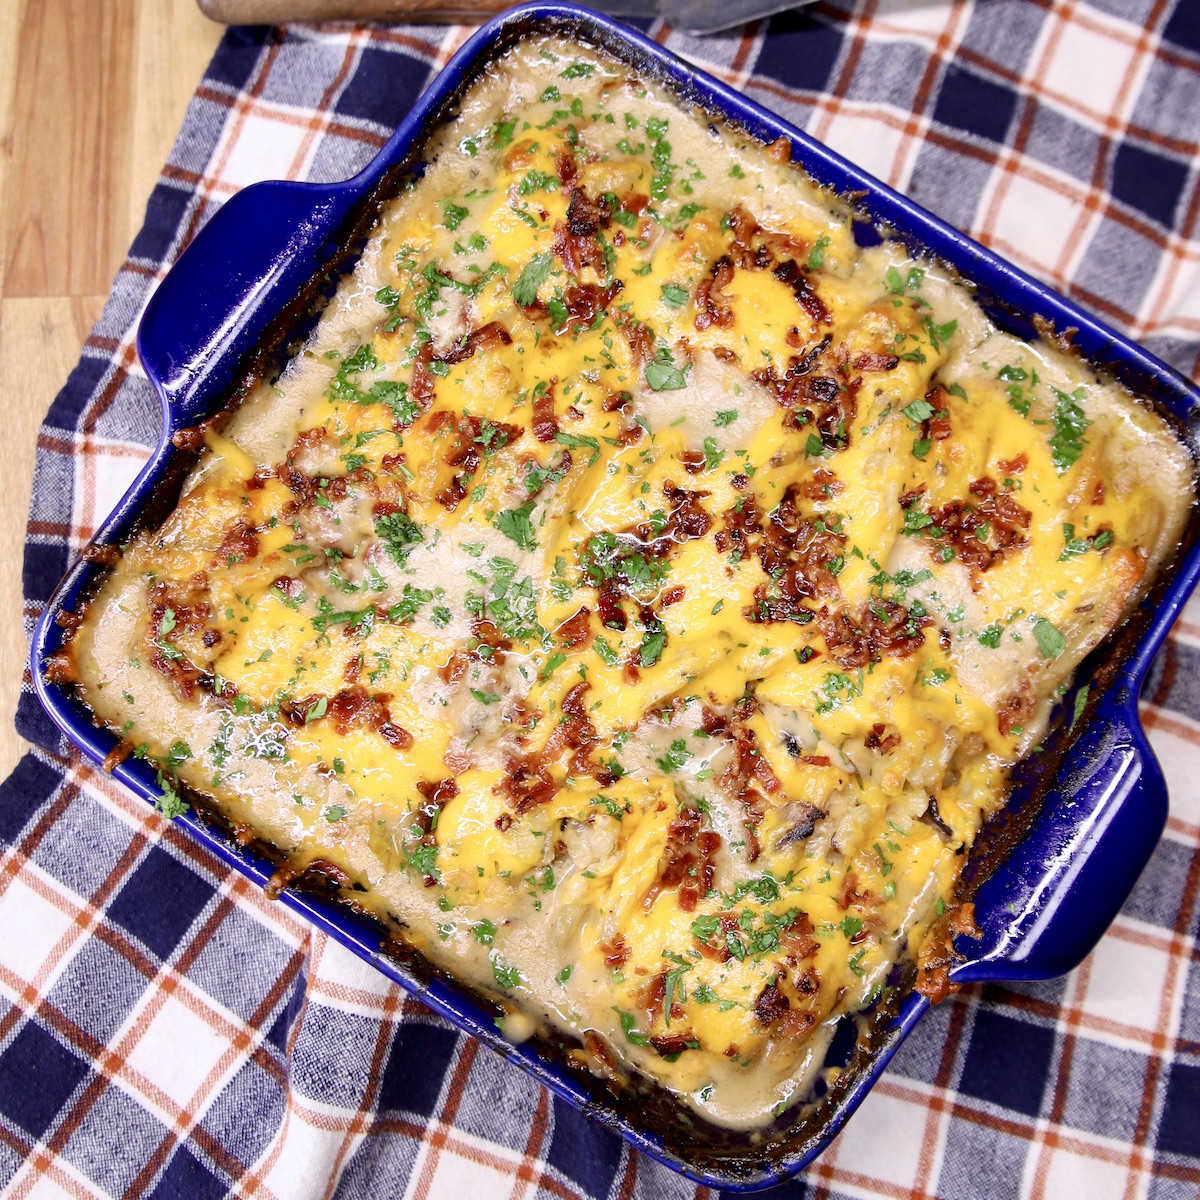 carla's potatoe and cheese Recipe by carlitta26 - Cookpad